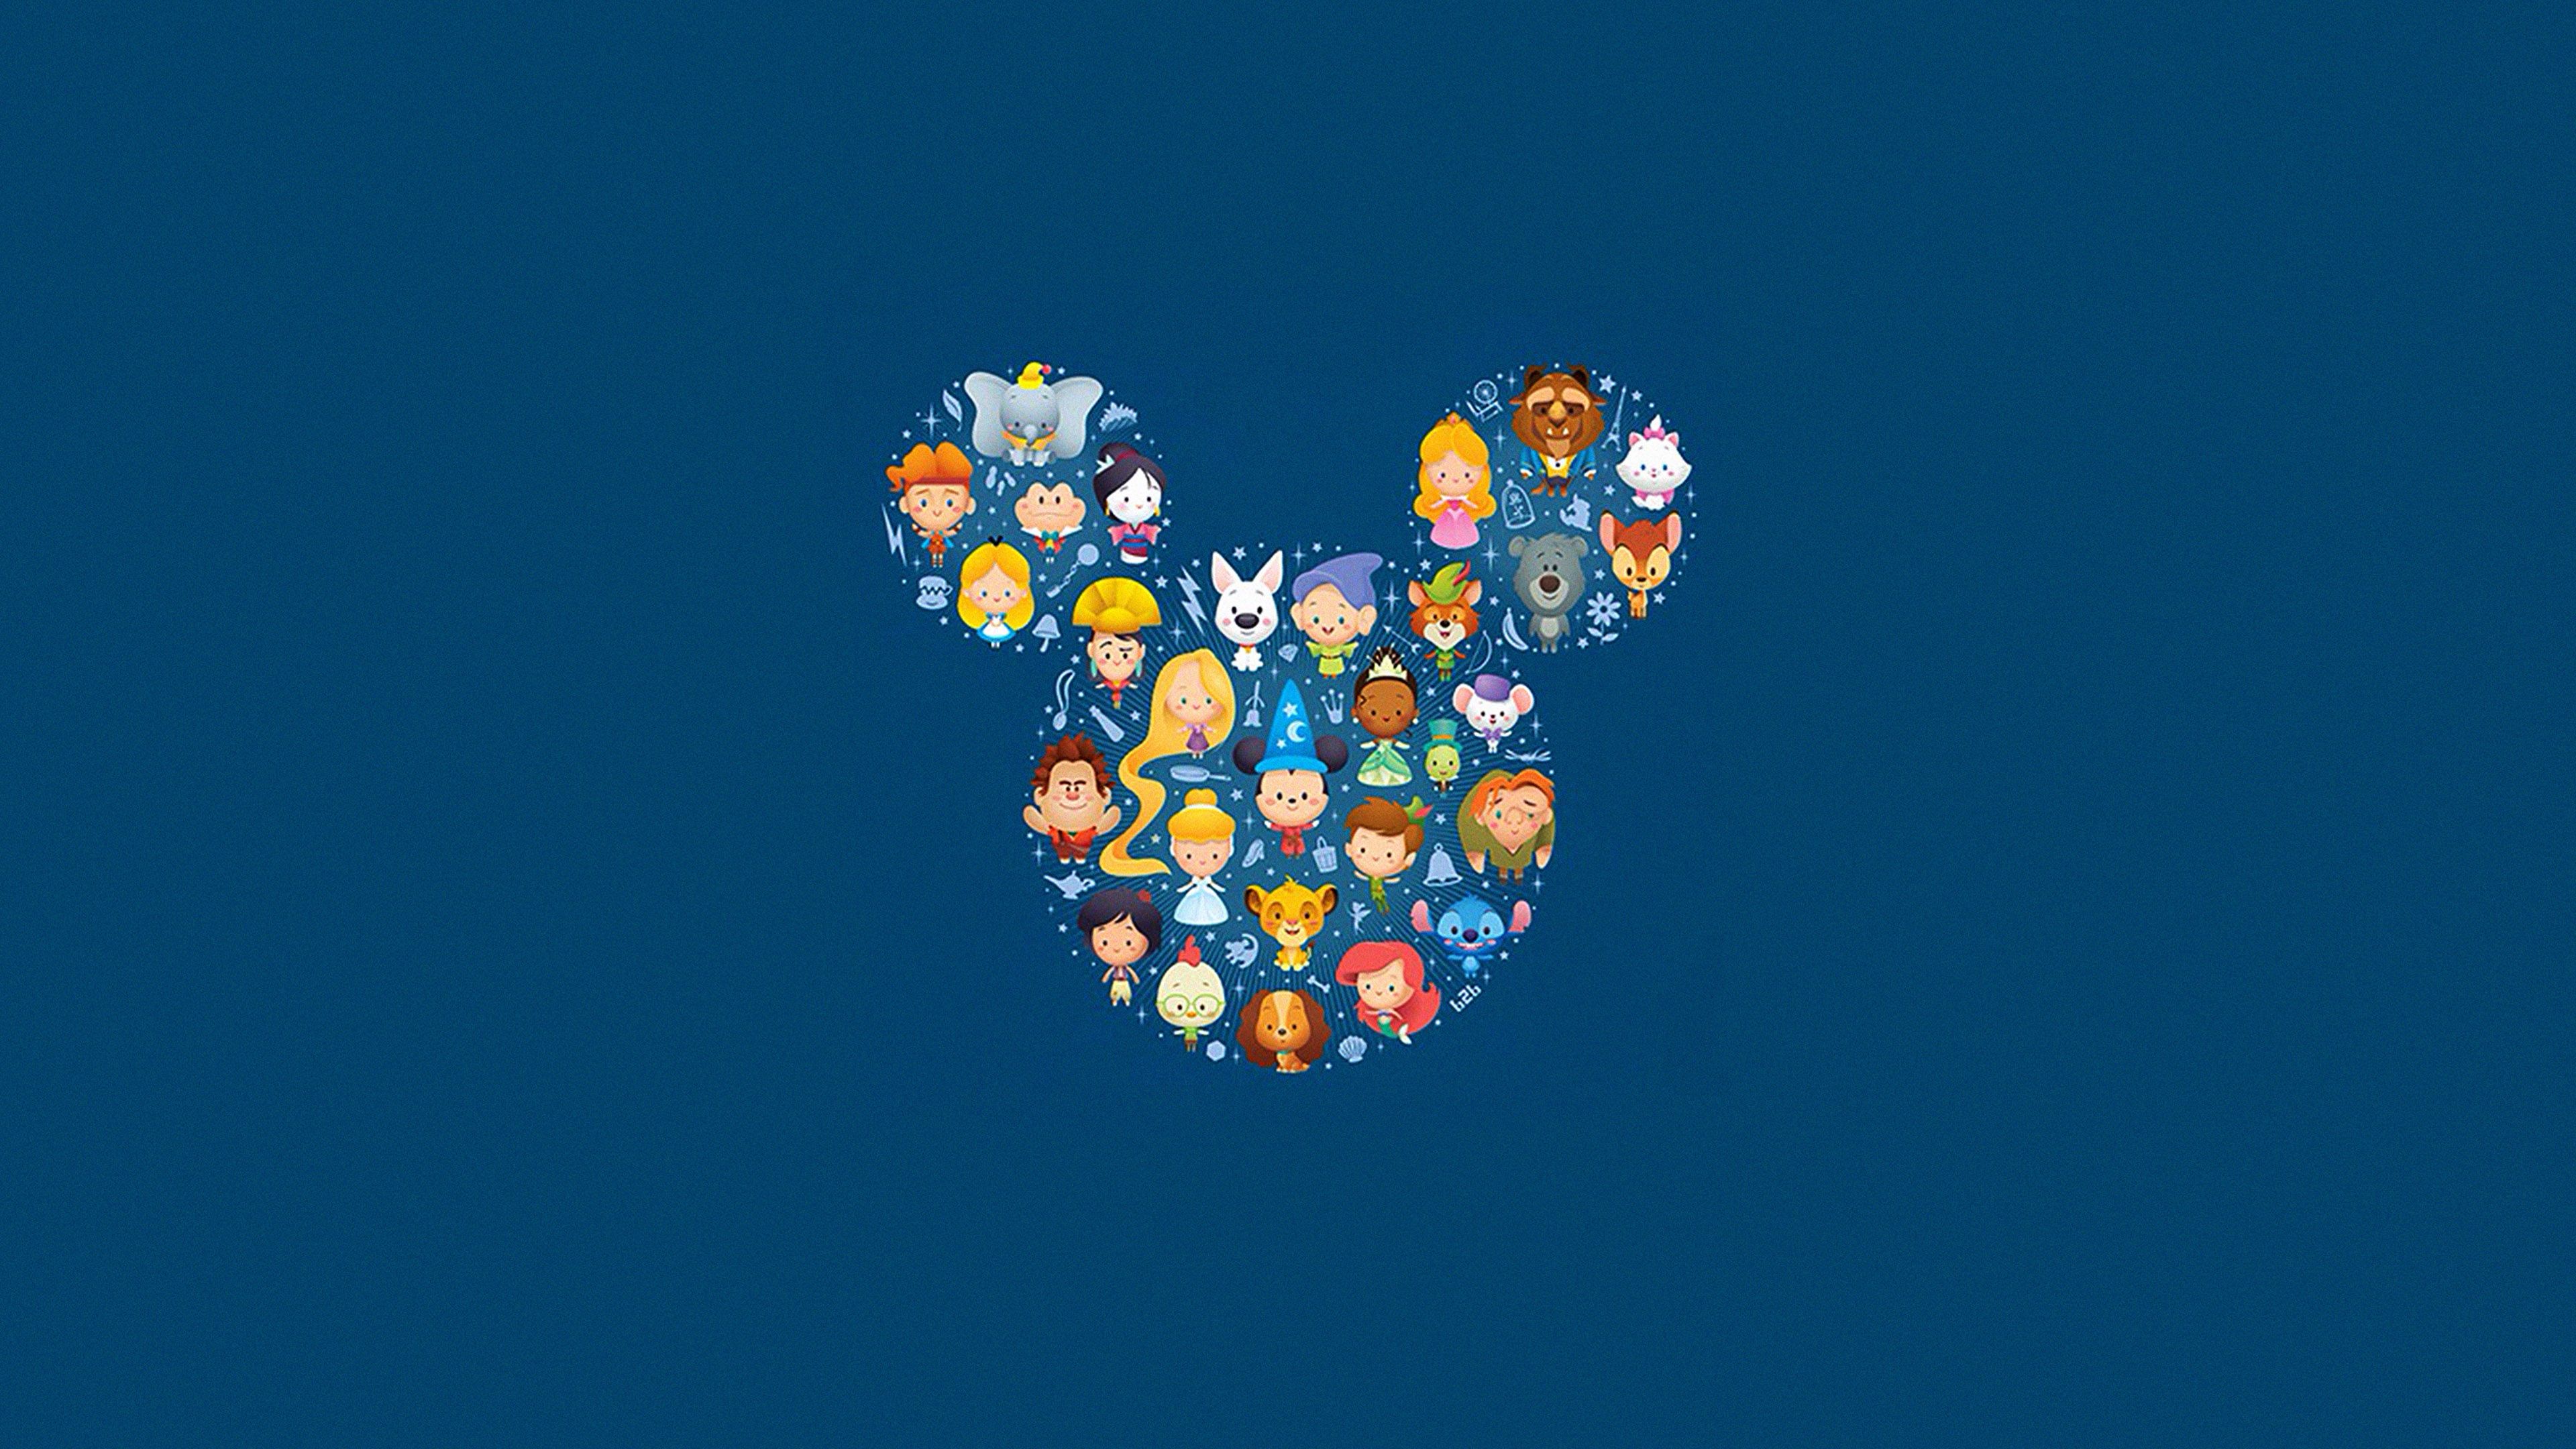 Tổng hợp 999 Disney desktop backgrounds Chất lượng cao, tải miễn phí